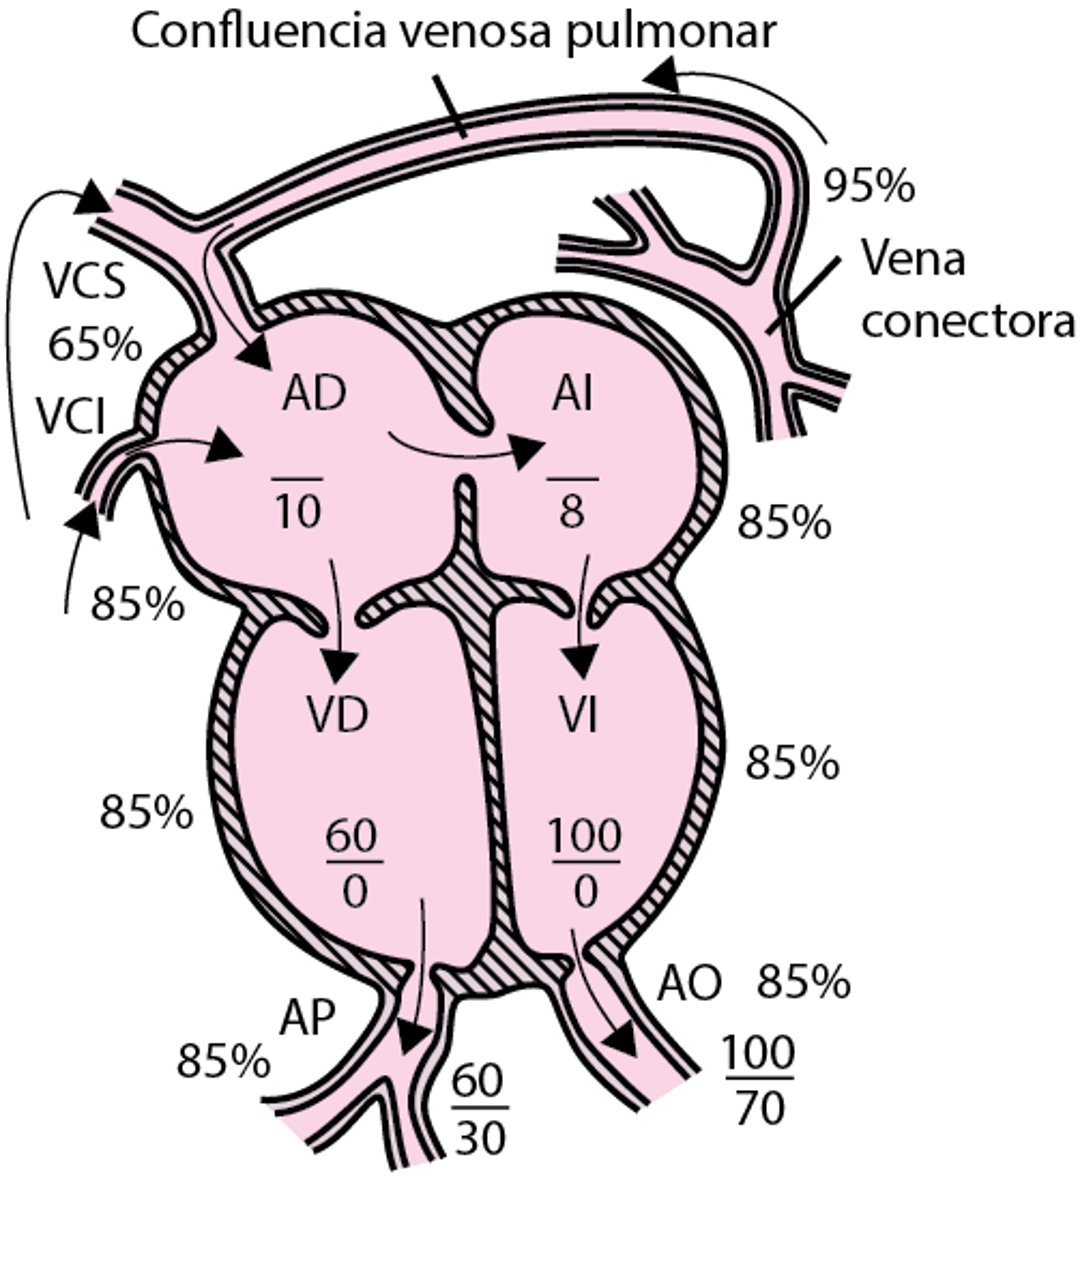 Anomalía total del retorno venoso pulmonar